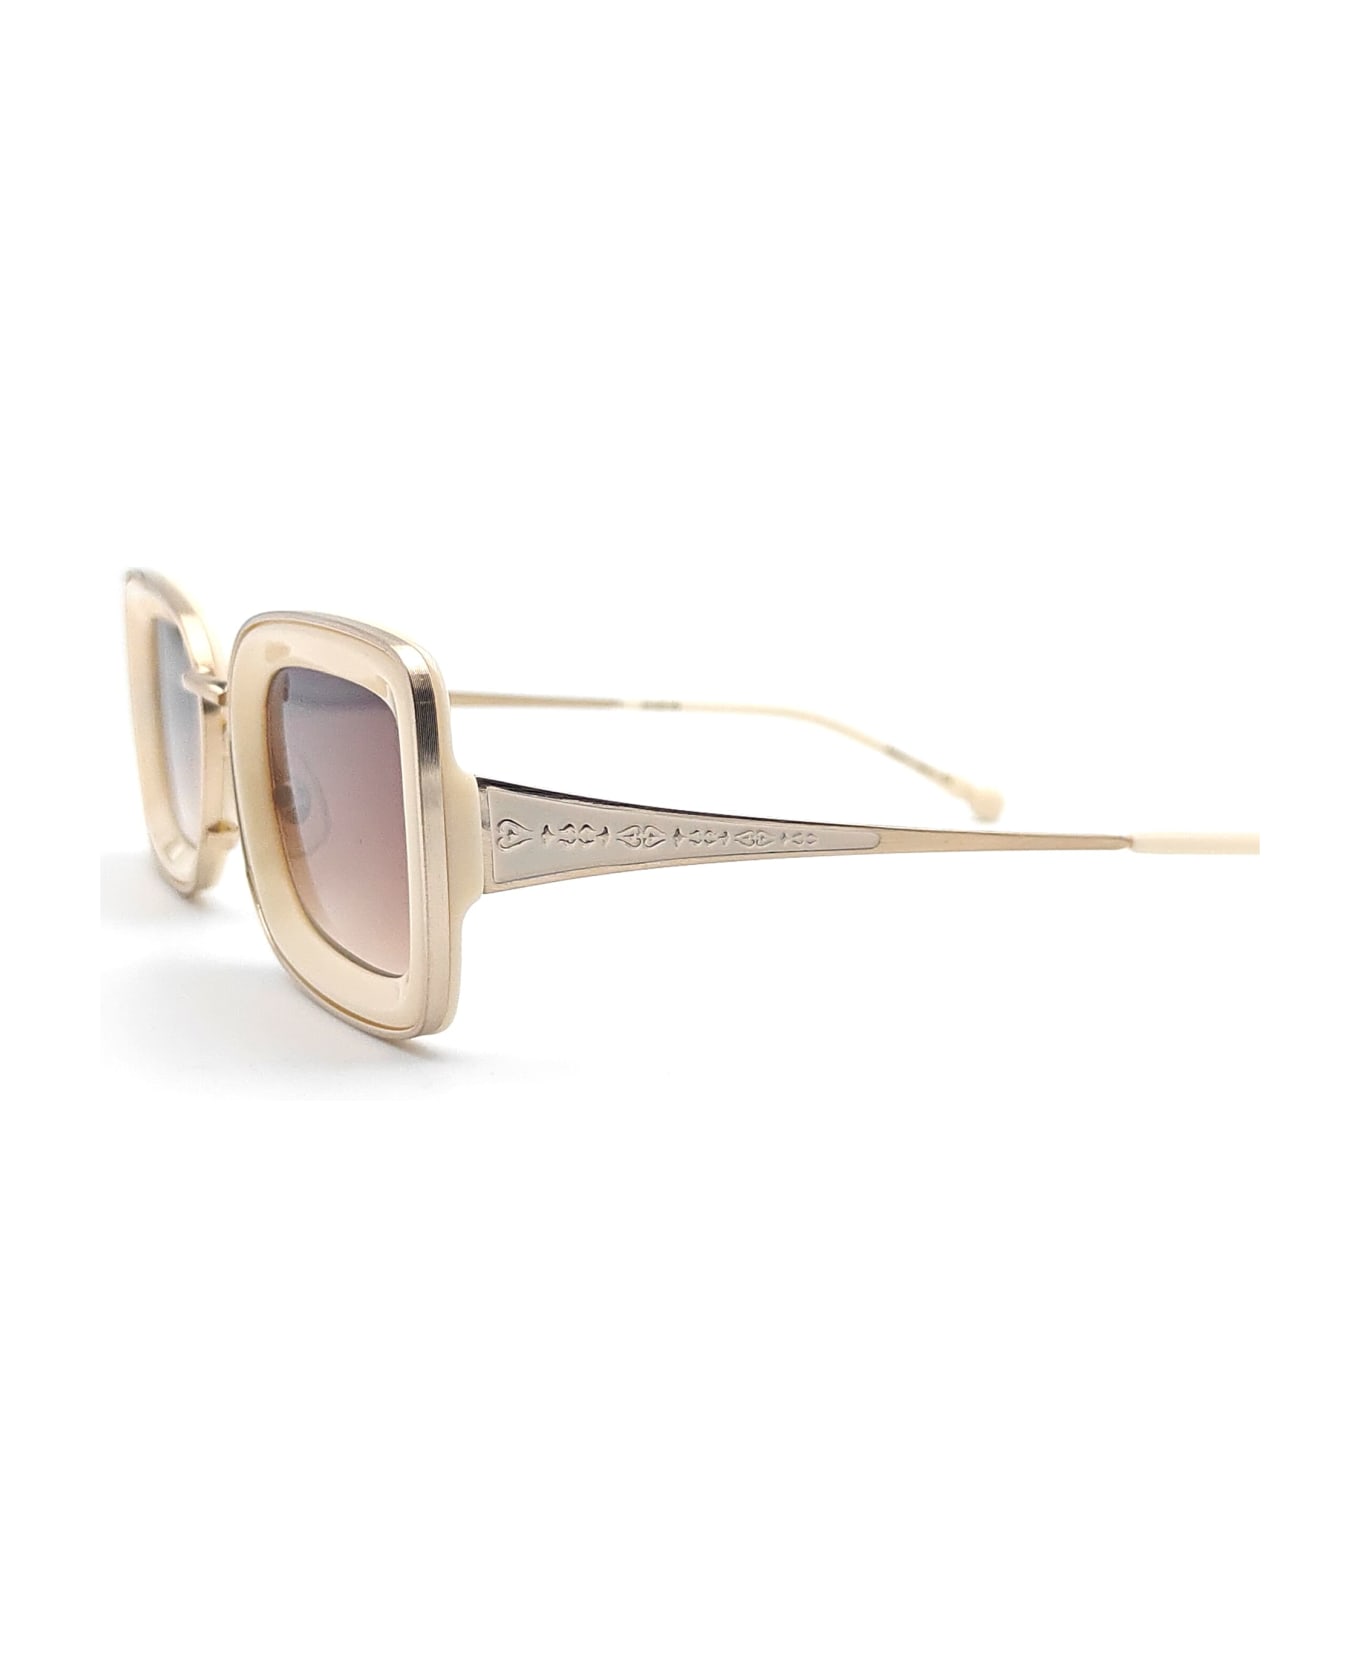 Matsuda M3124 - Brushed Gold / Milk White Sunglasses - Gold/White サングラス